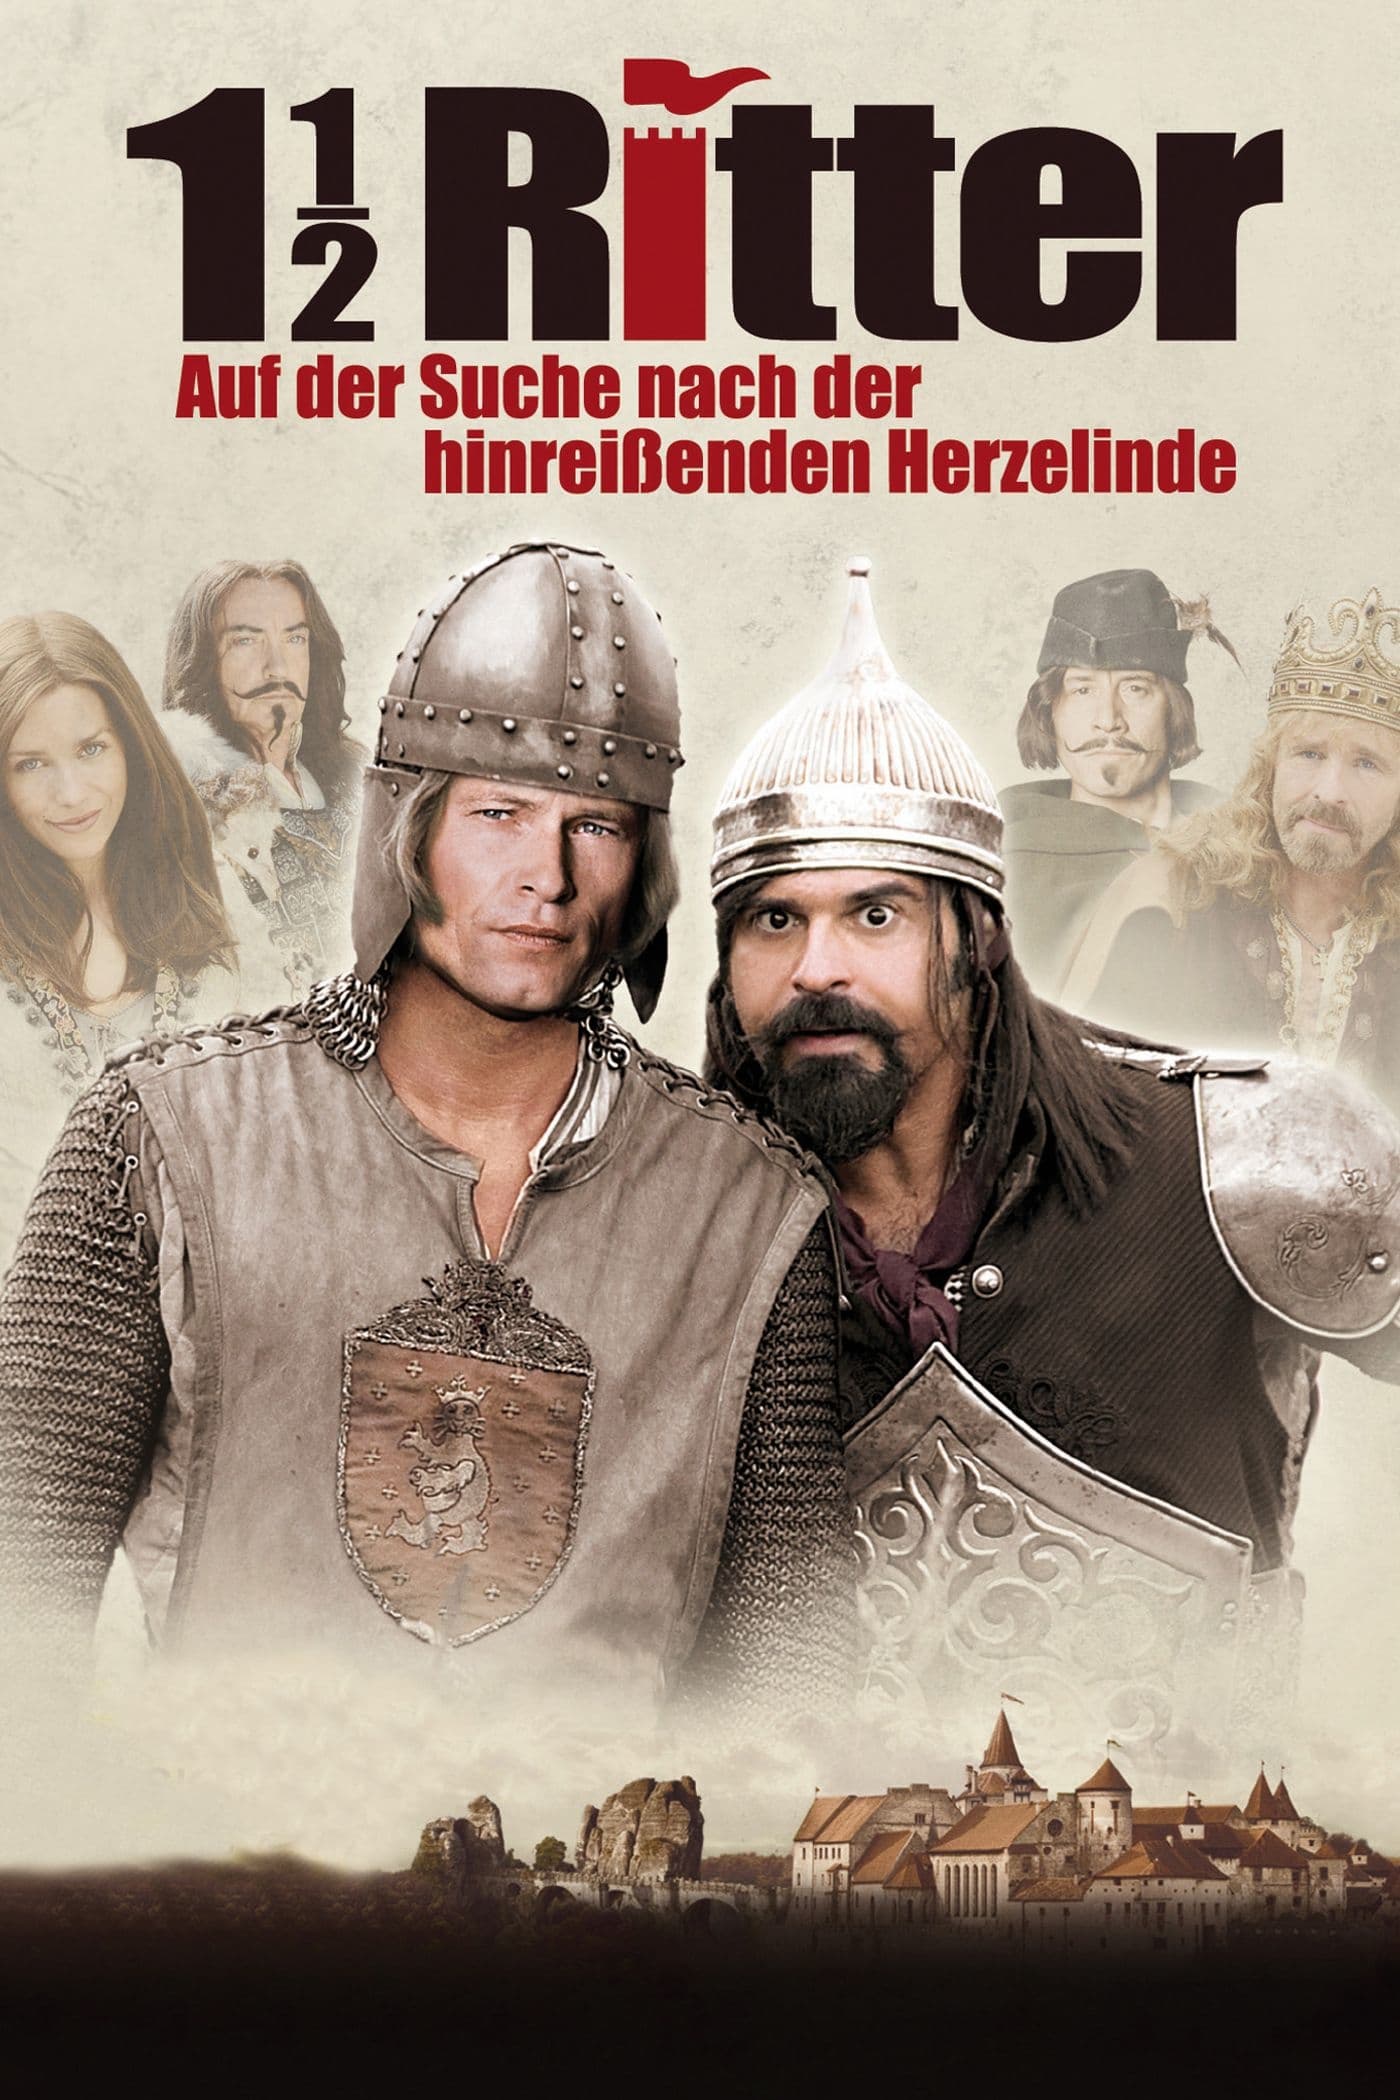 1½ Knights - In Search of the Ravishing Princess Herzelinde (2008)